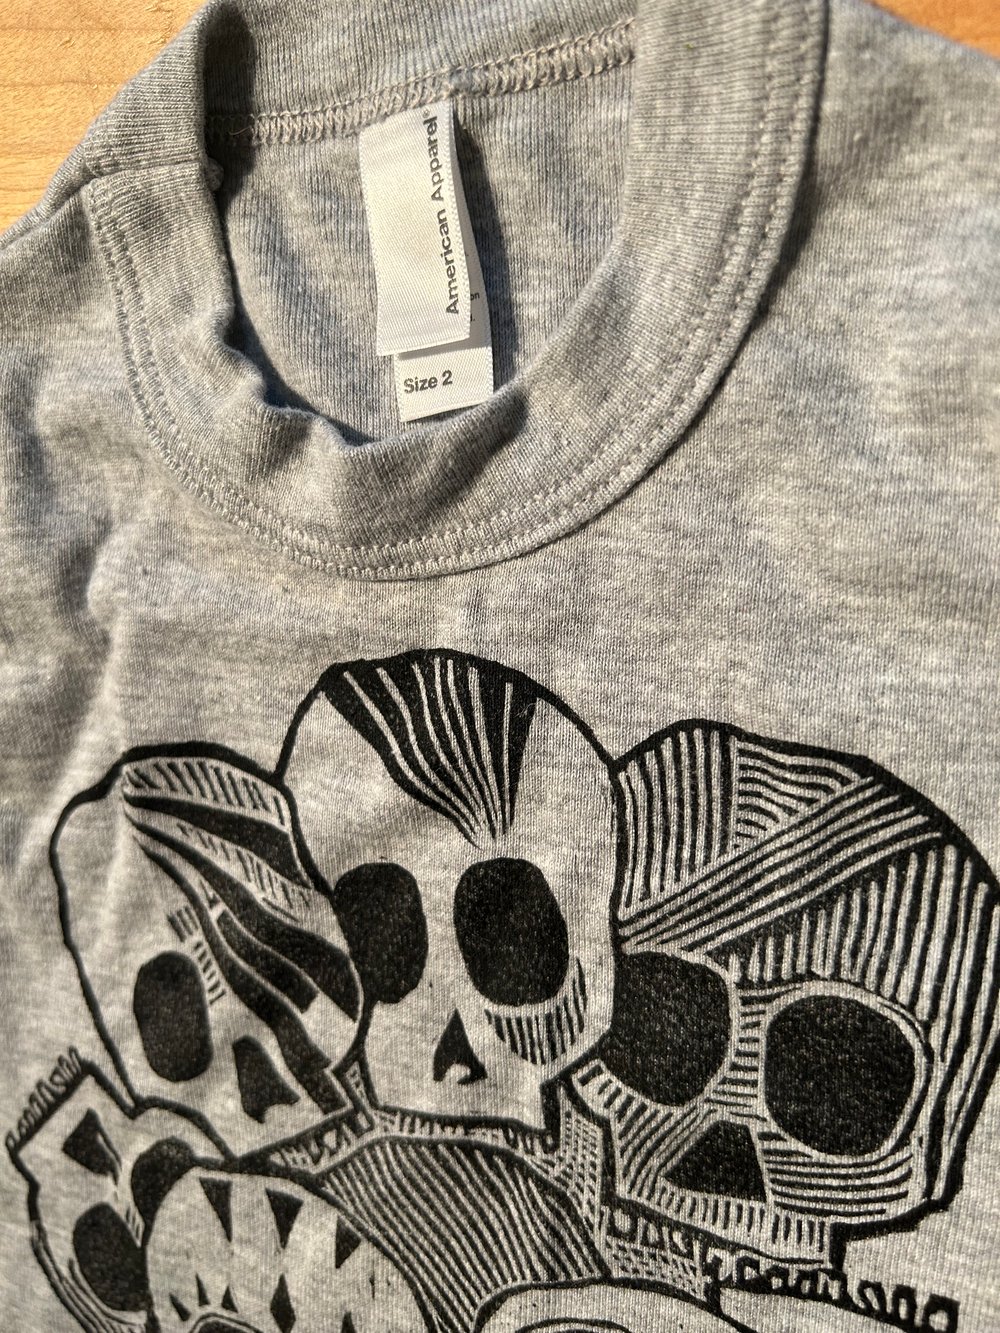 Skull Pile - Kids 100% Cotton Tshirt